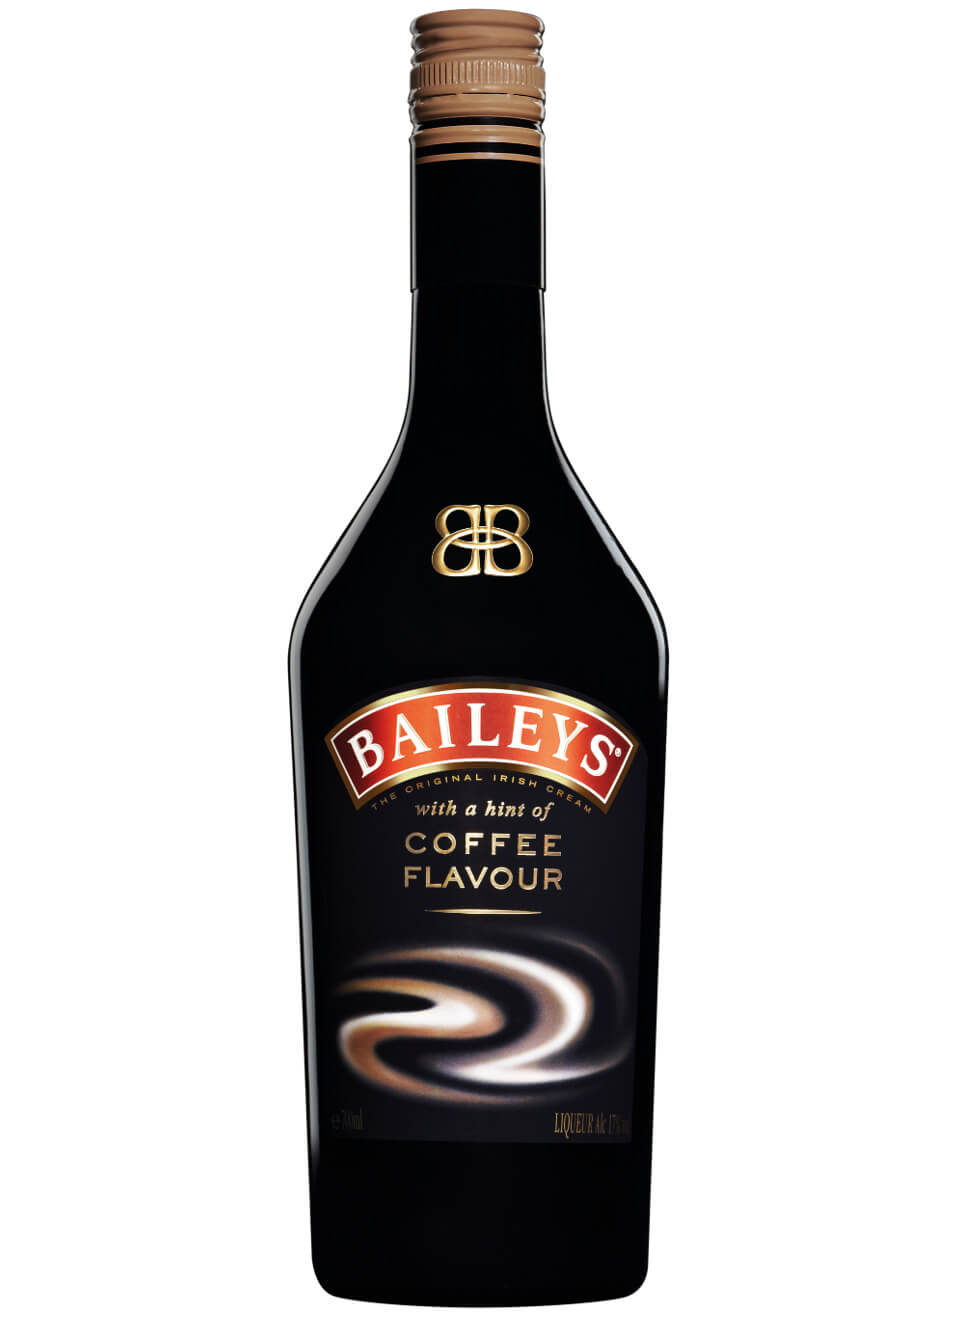 Baileys Coffee Likör 0,7 L günstig kaufen | Spirituosenworld.de ...